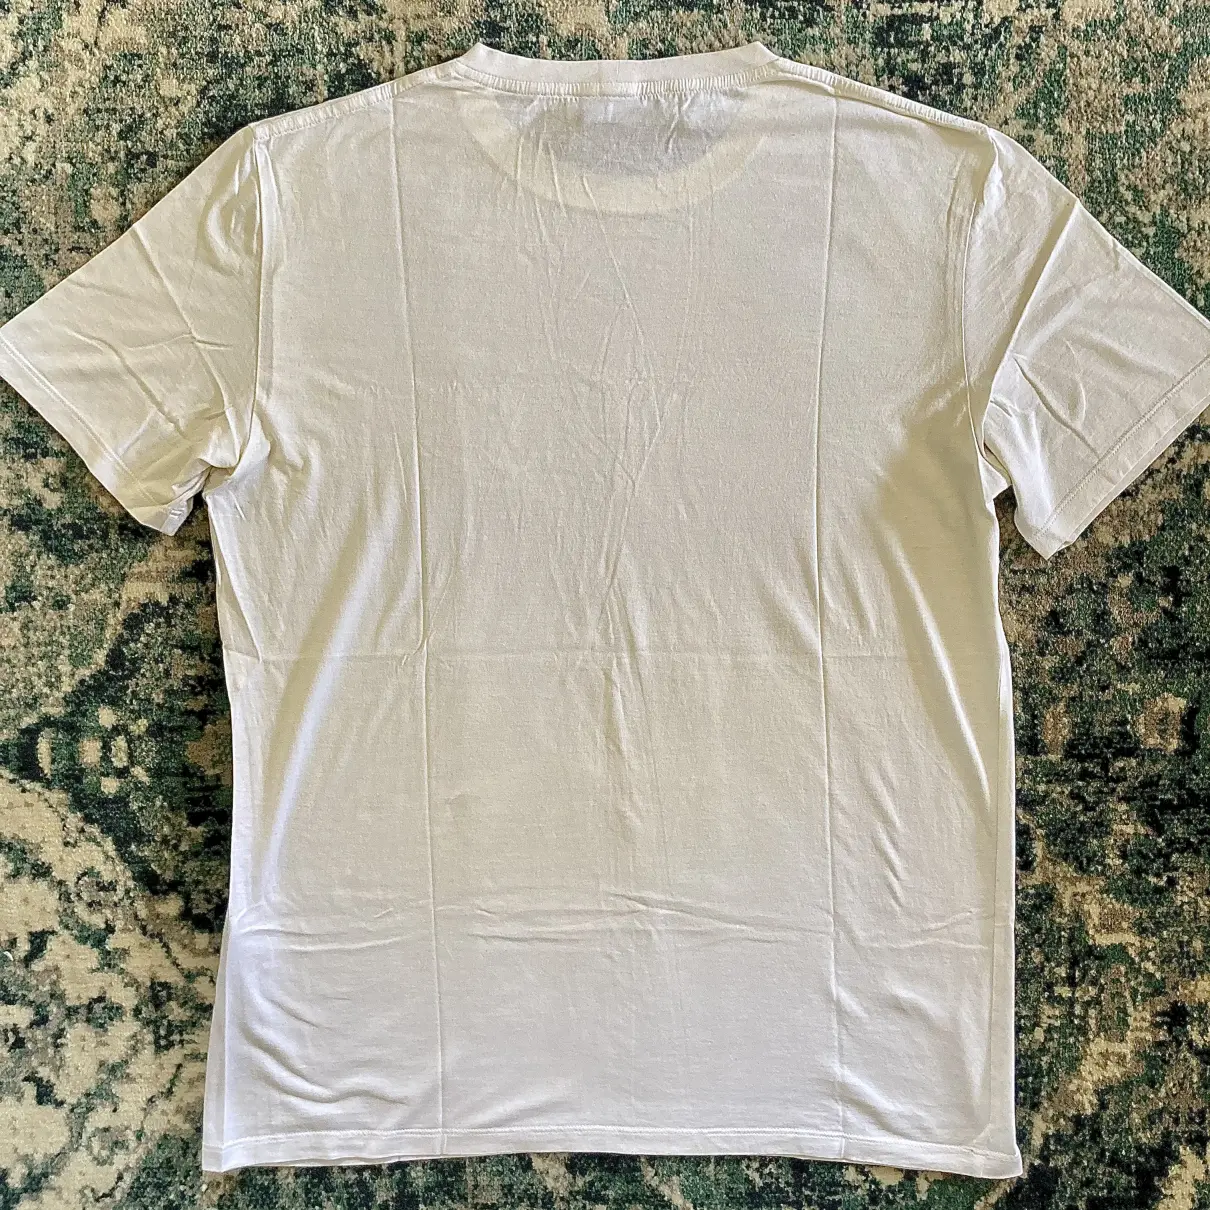 Buy Yves Saint Laurent T-shirt online - Vintage